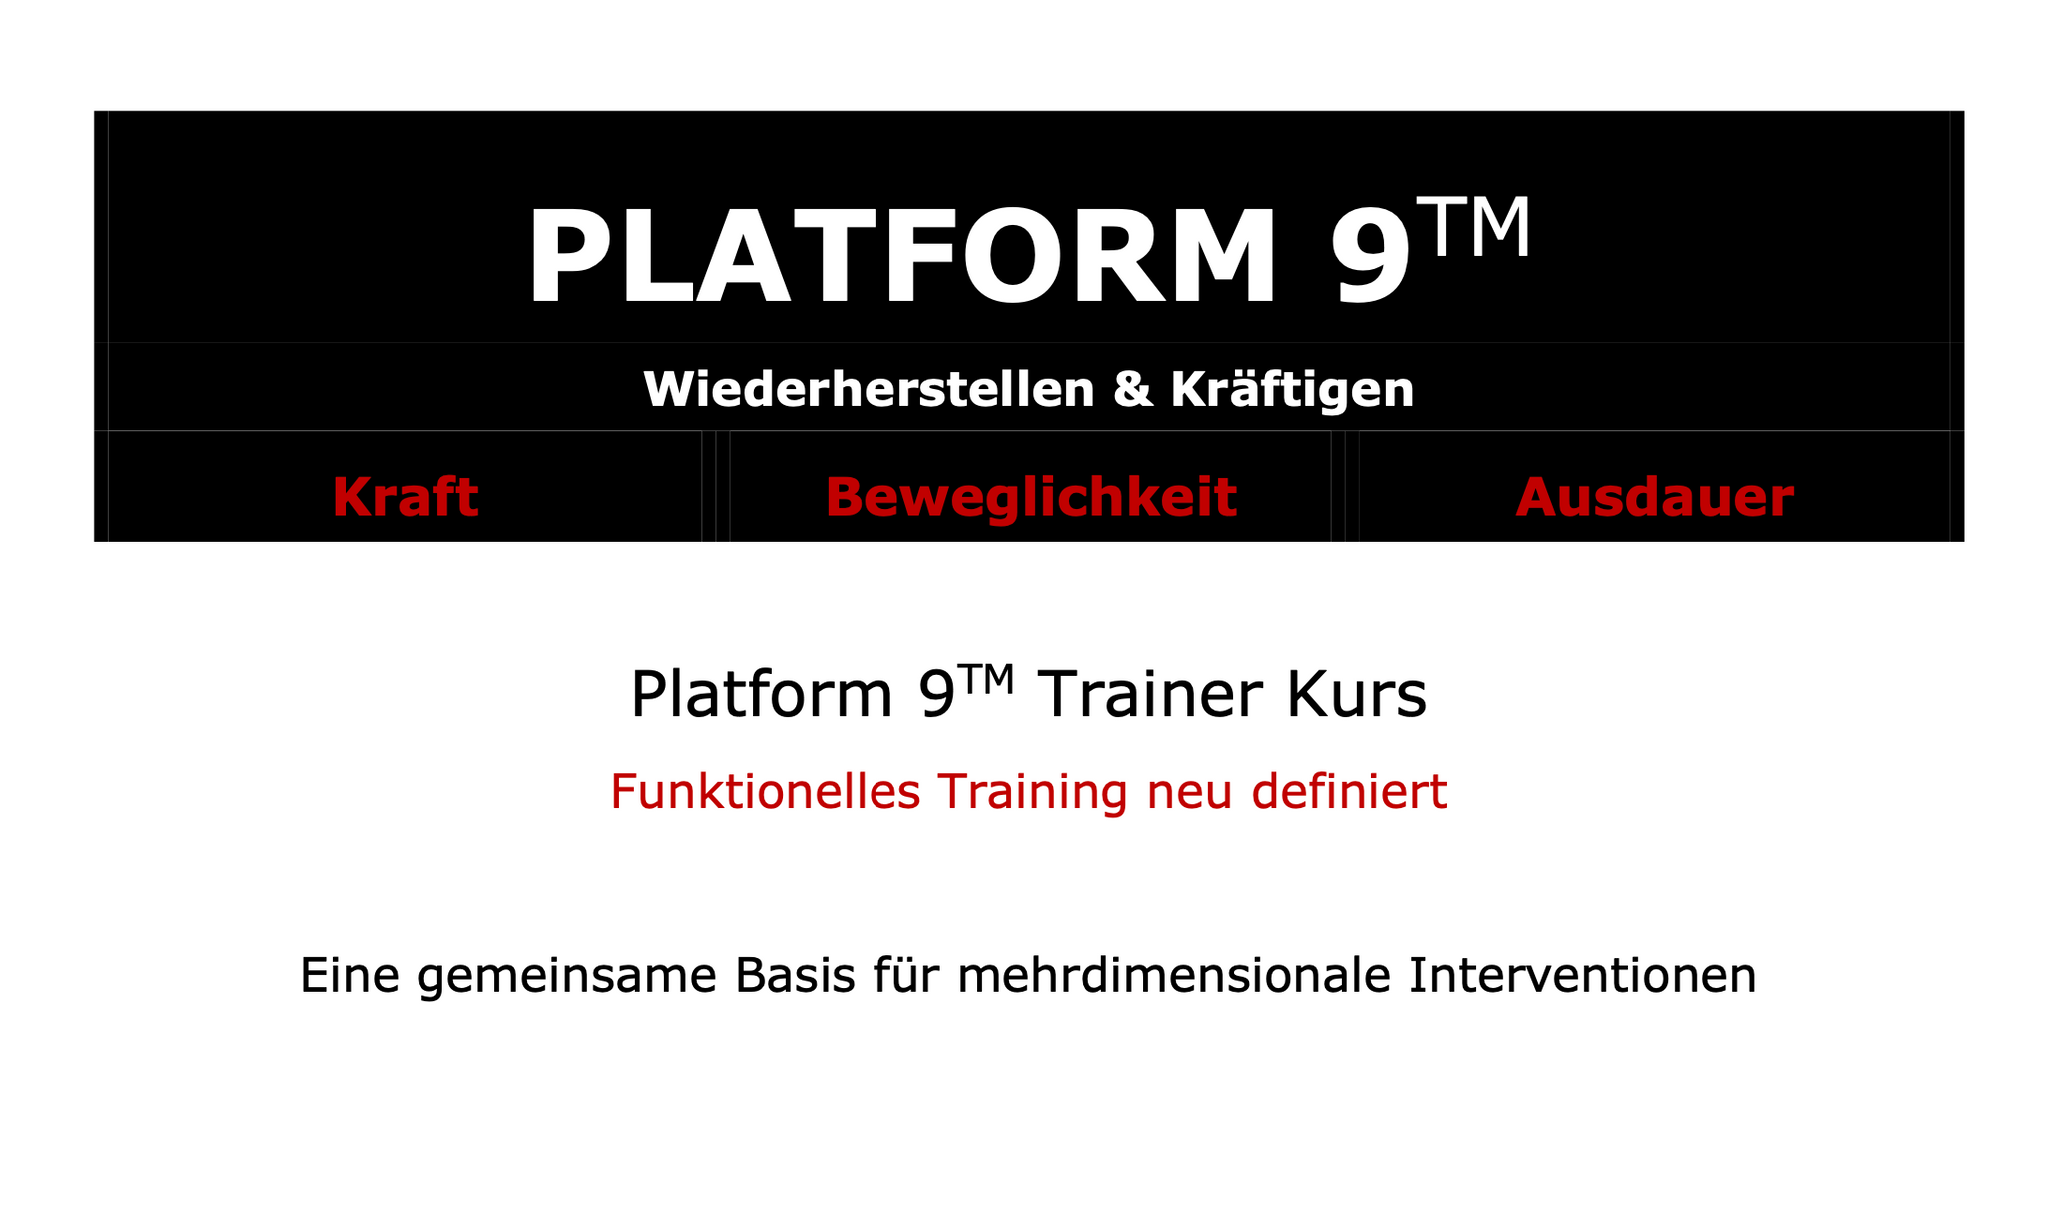 Procedos Platform 9TM Trainer Kurs information.